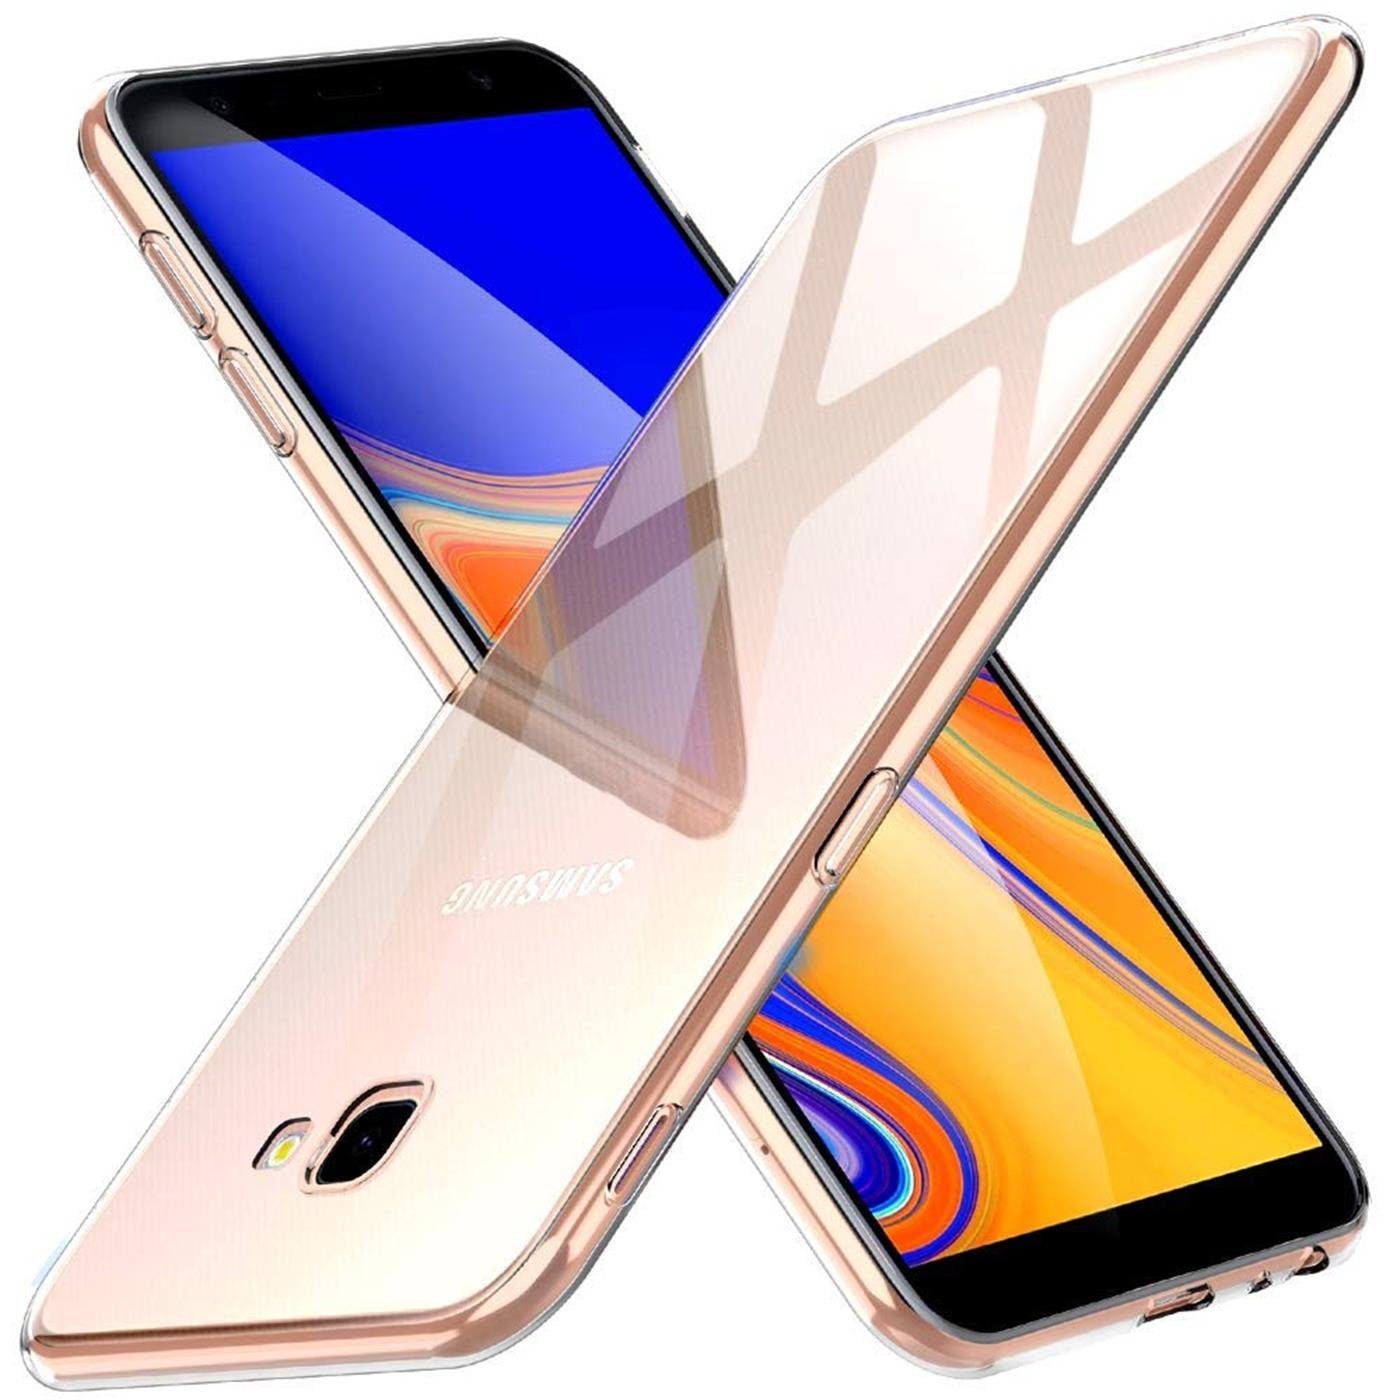 CoolGadget Handyhülle Transparent Ultra Slim Case für Samsung Galaxy J4 Plus 6 Zoll, Silikon Hülle Dünne Schutzhülle für Samsung J4+ Hülle